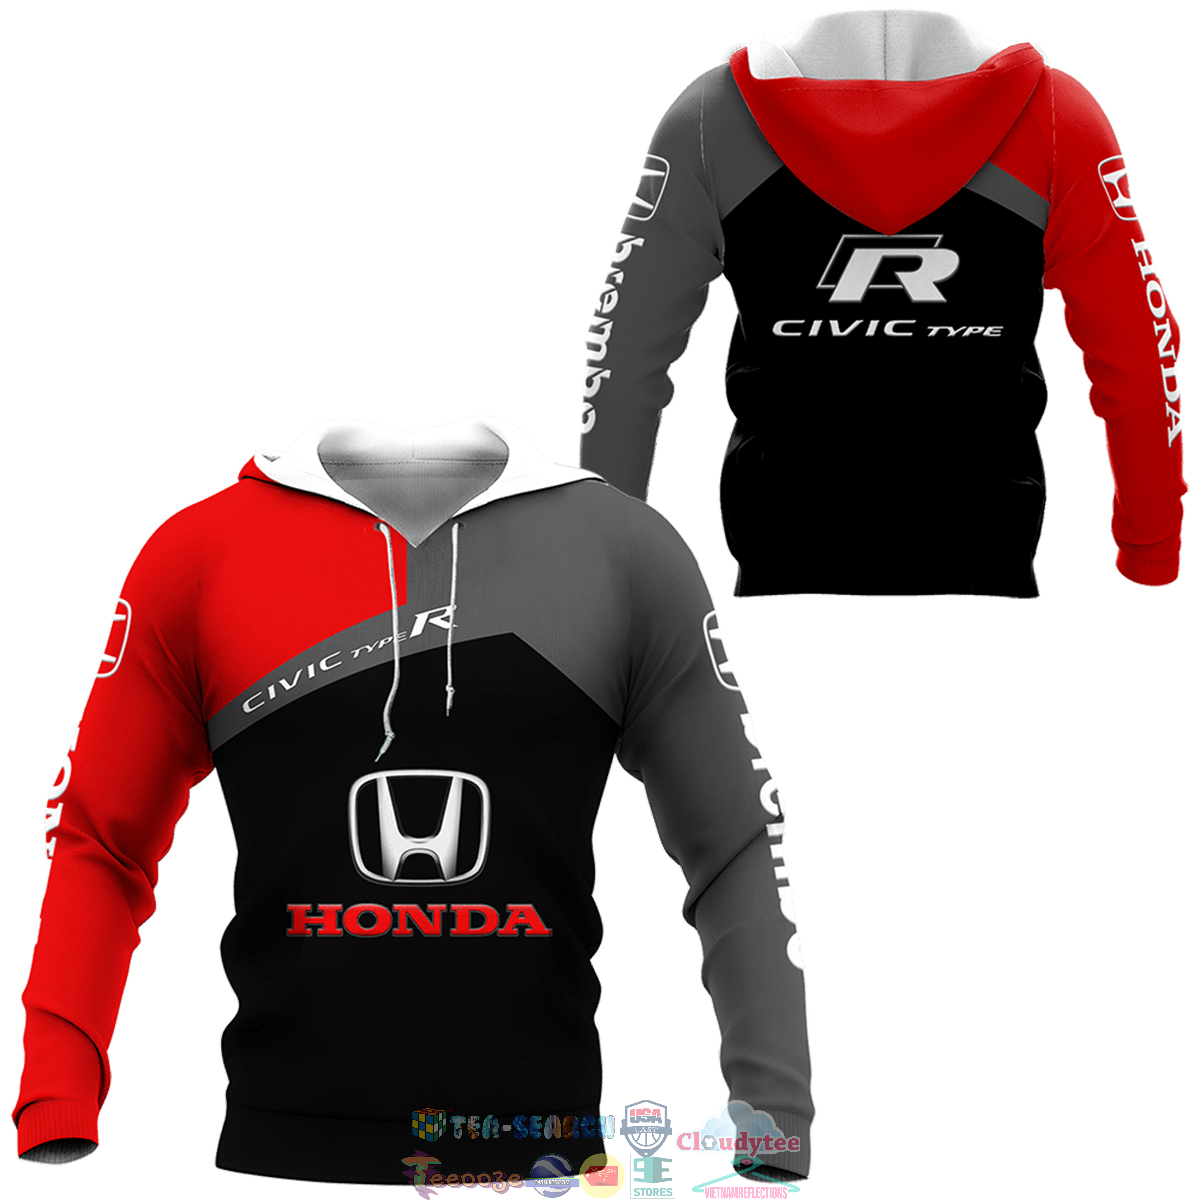 Honda Civic Type R ver 3 3D hoodie and t-shirt